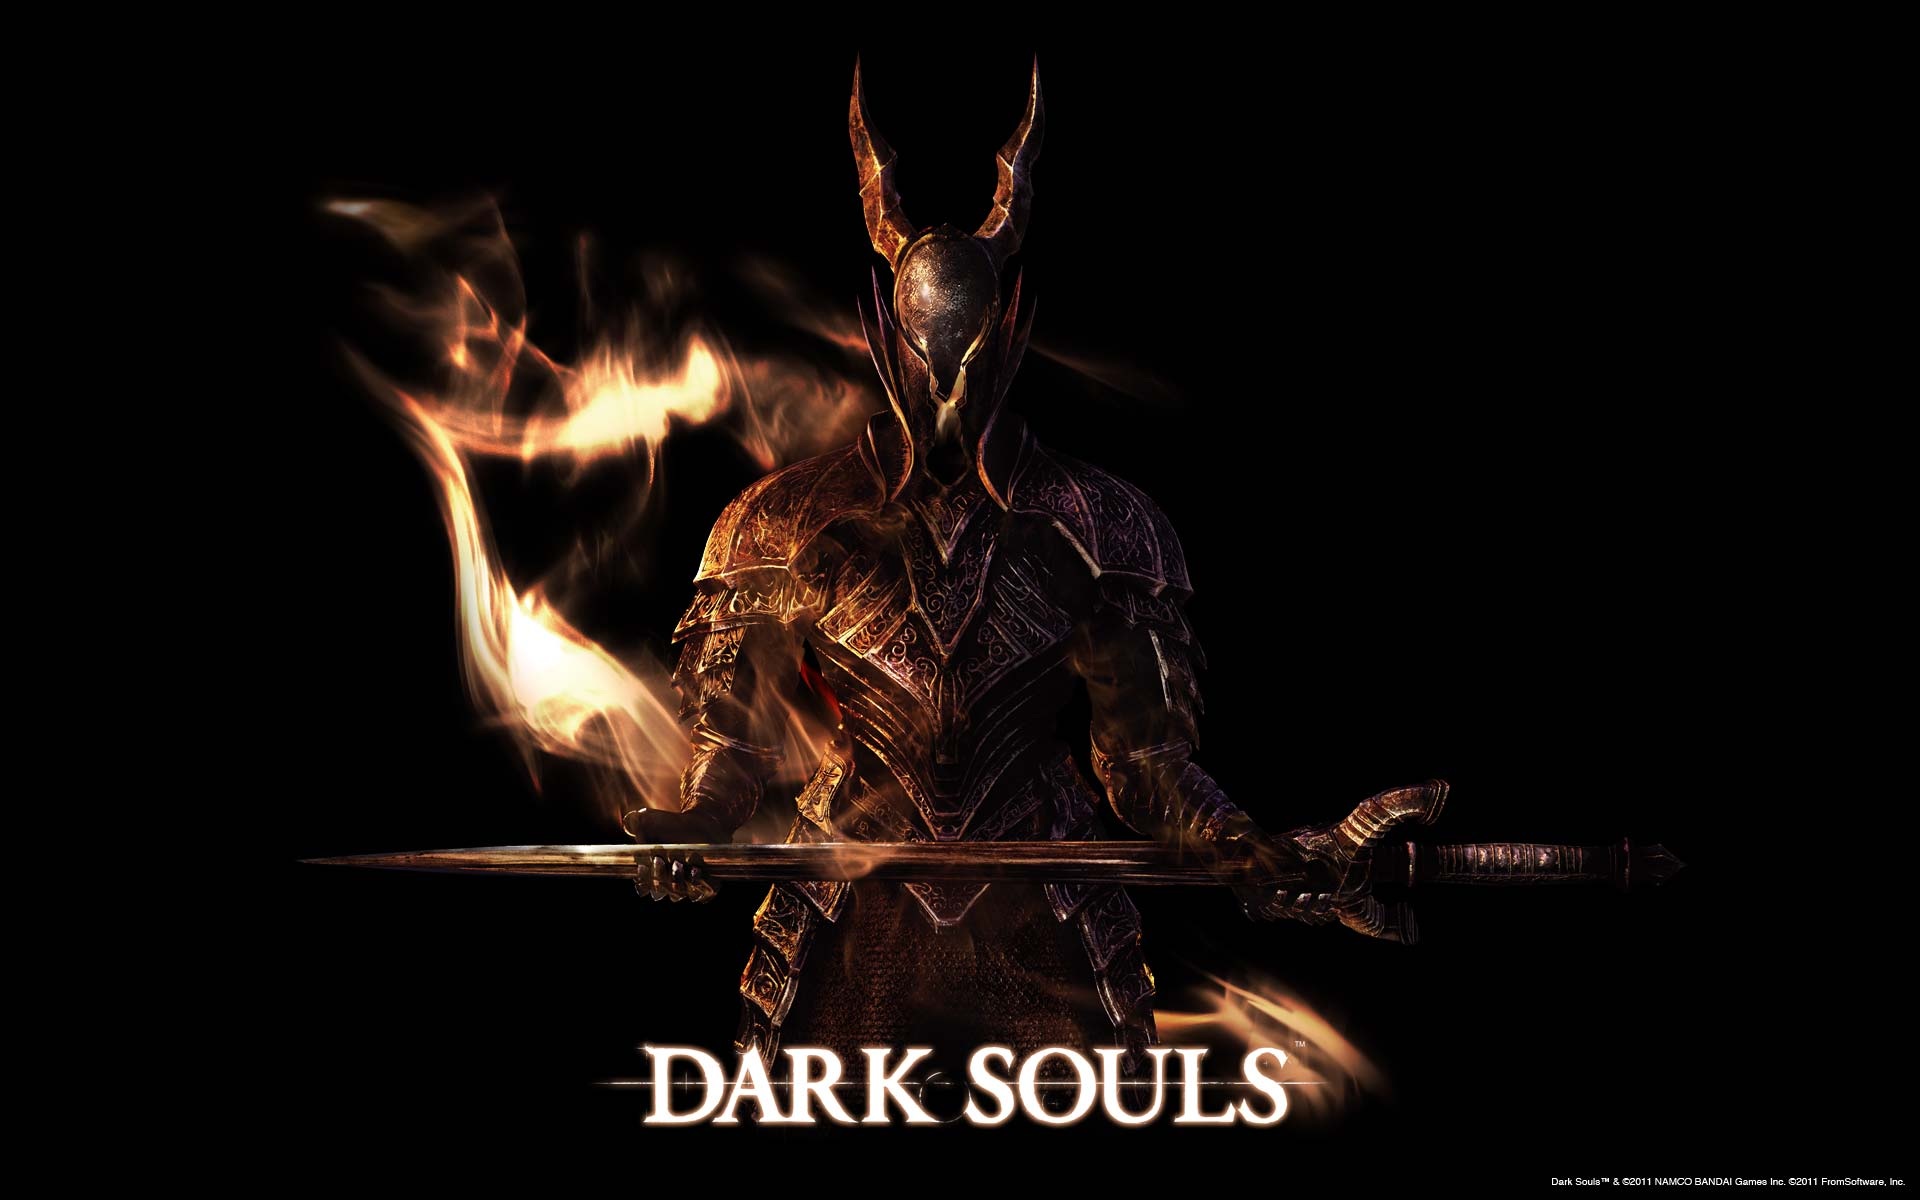 Dark Souls PS3 Steelbook is a Zavvi Exclusive!